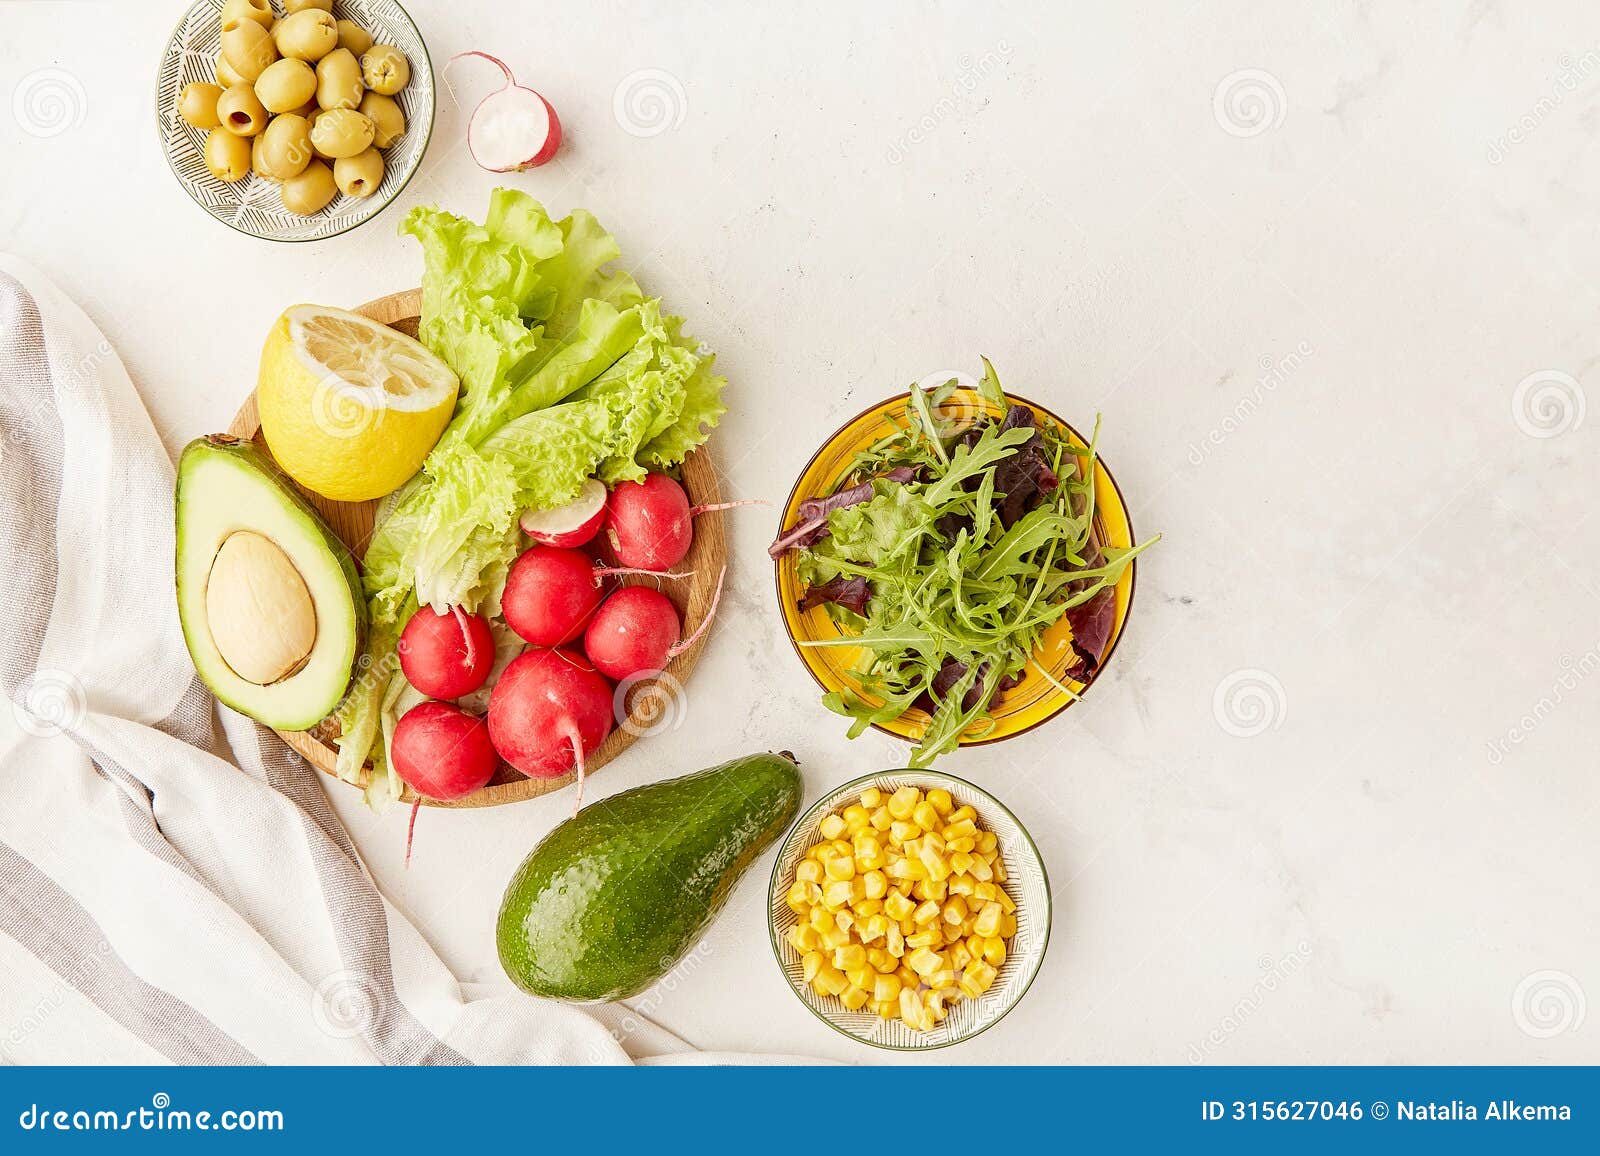 fodmap, keto, vegan ingredients, plant based diet, vegetables and fruits, avocado, greens, olives. fodmap, paleo diet